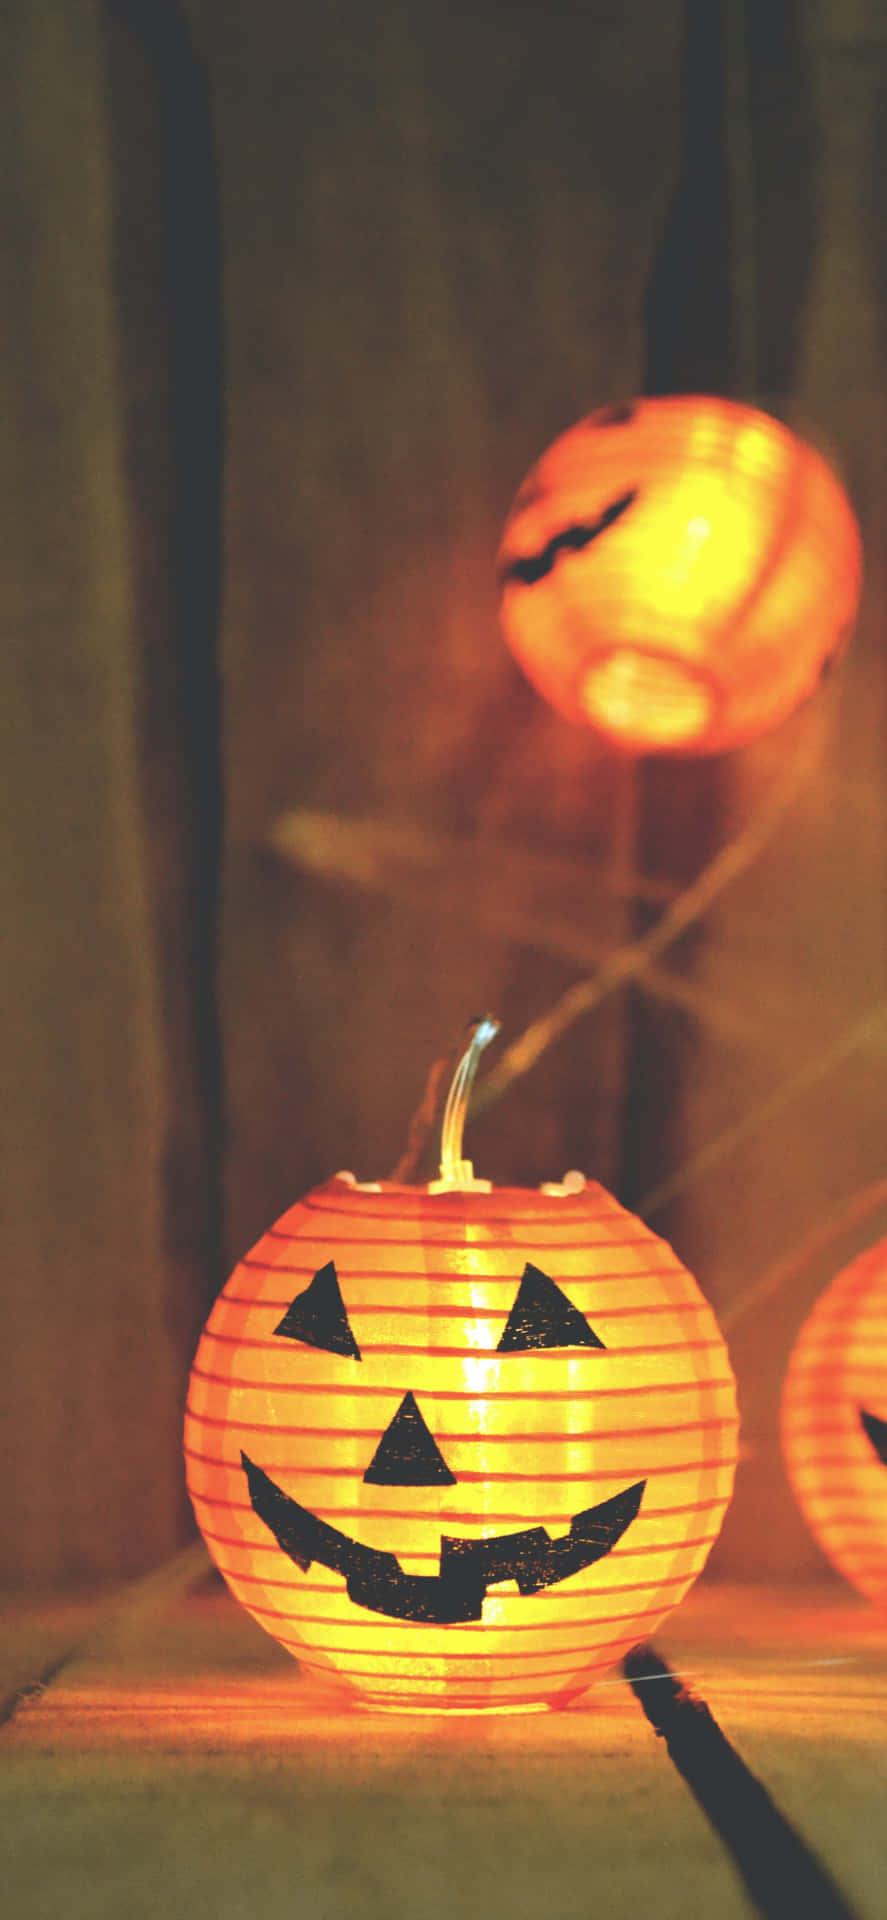 Sfondoda Iphone Con Jack O'lantern Per Halloween.